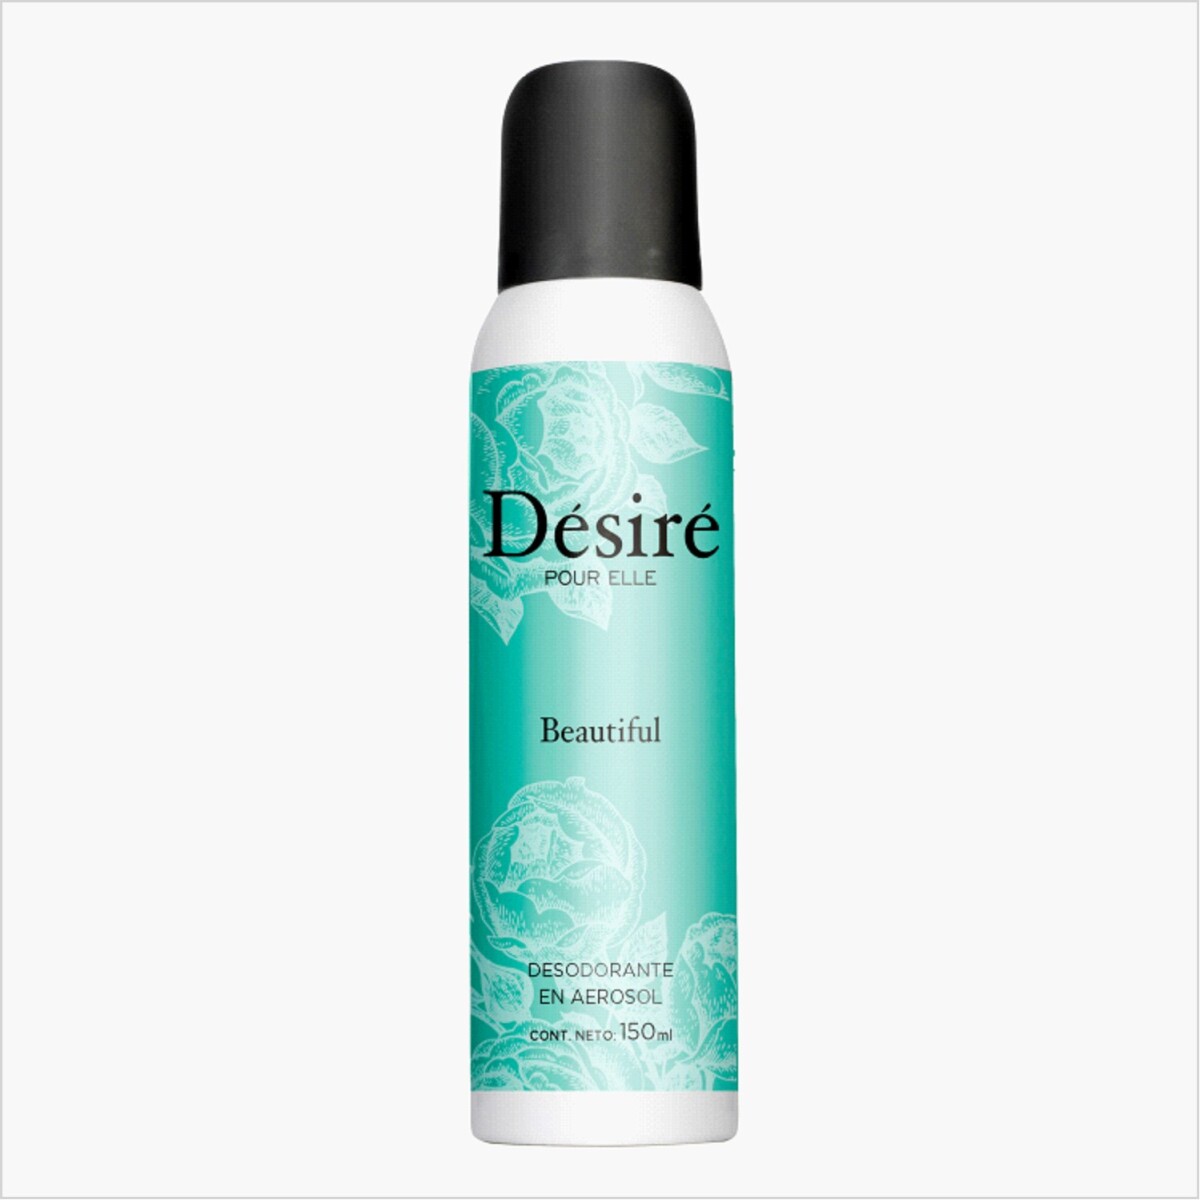 Desire Desodorante Beautiful 